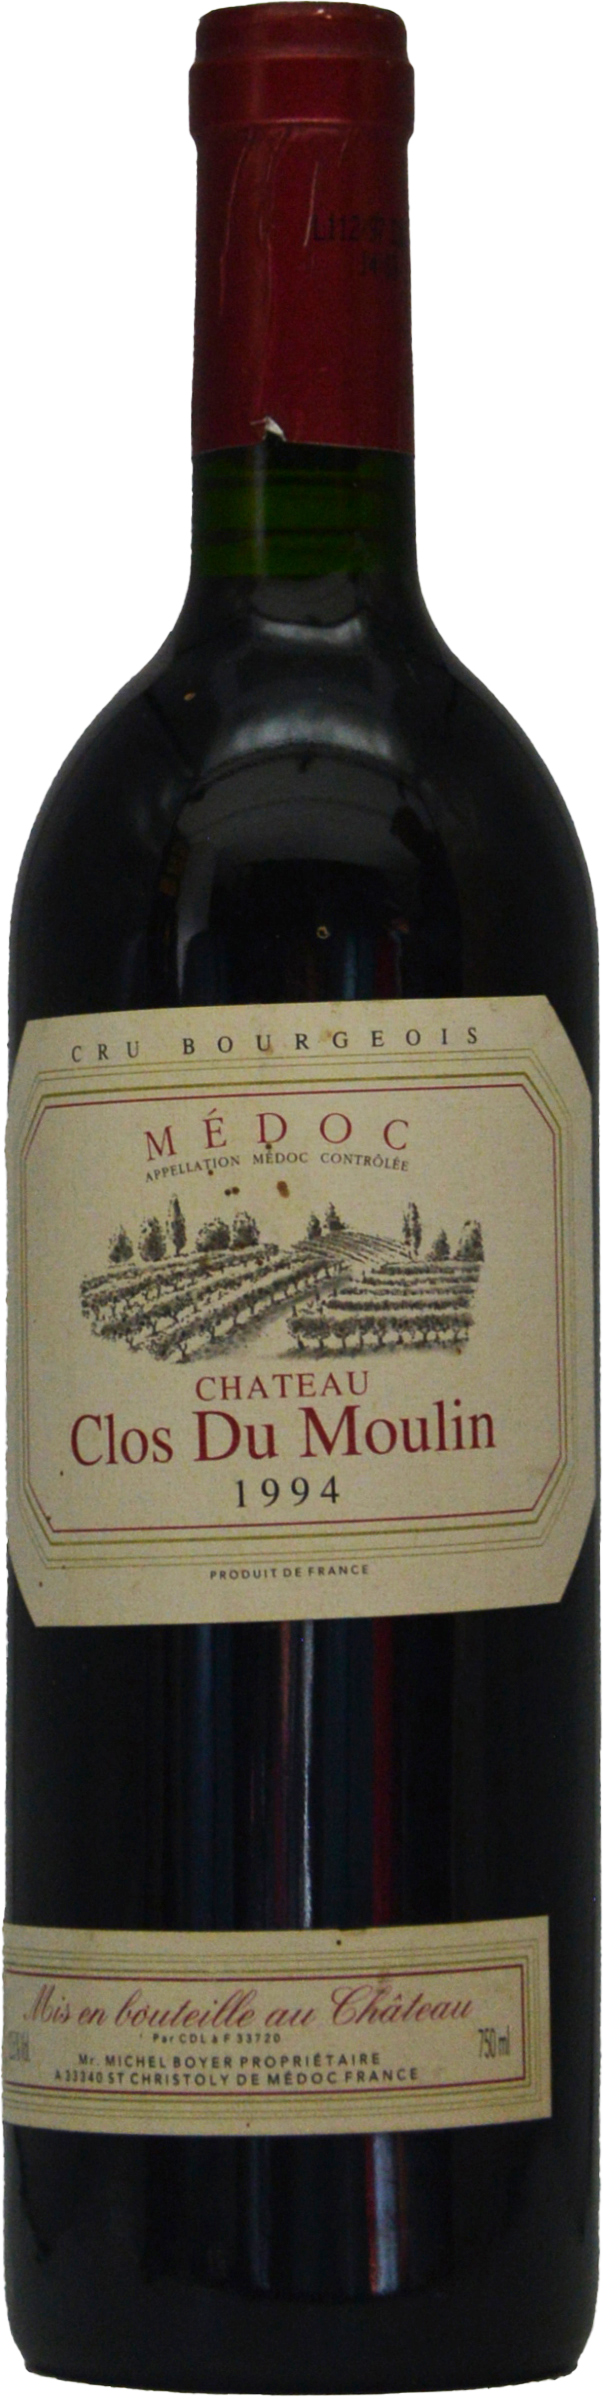 Clos du Moulin Cru Bourgeois Medoc 1994